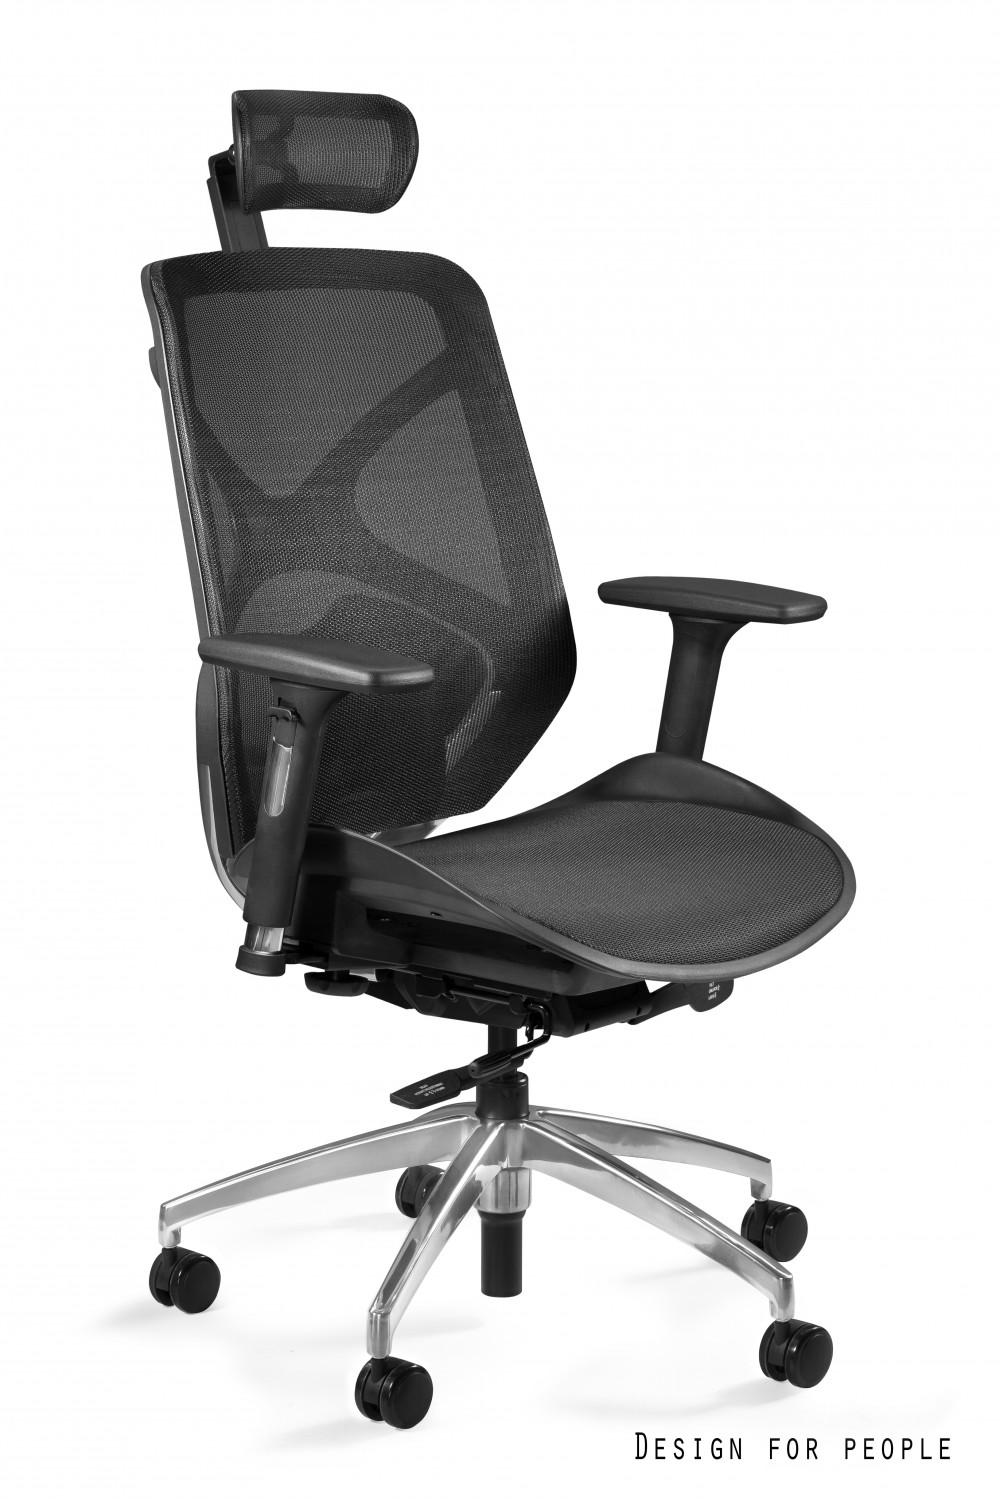 UNIQUE HERO NET ergonomikus irodai szék